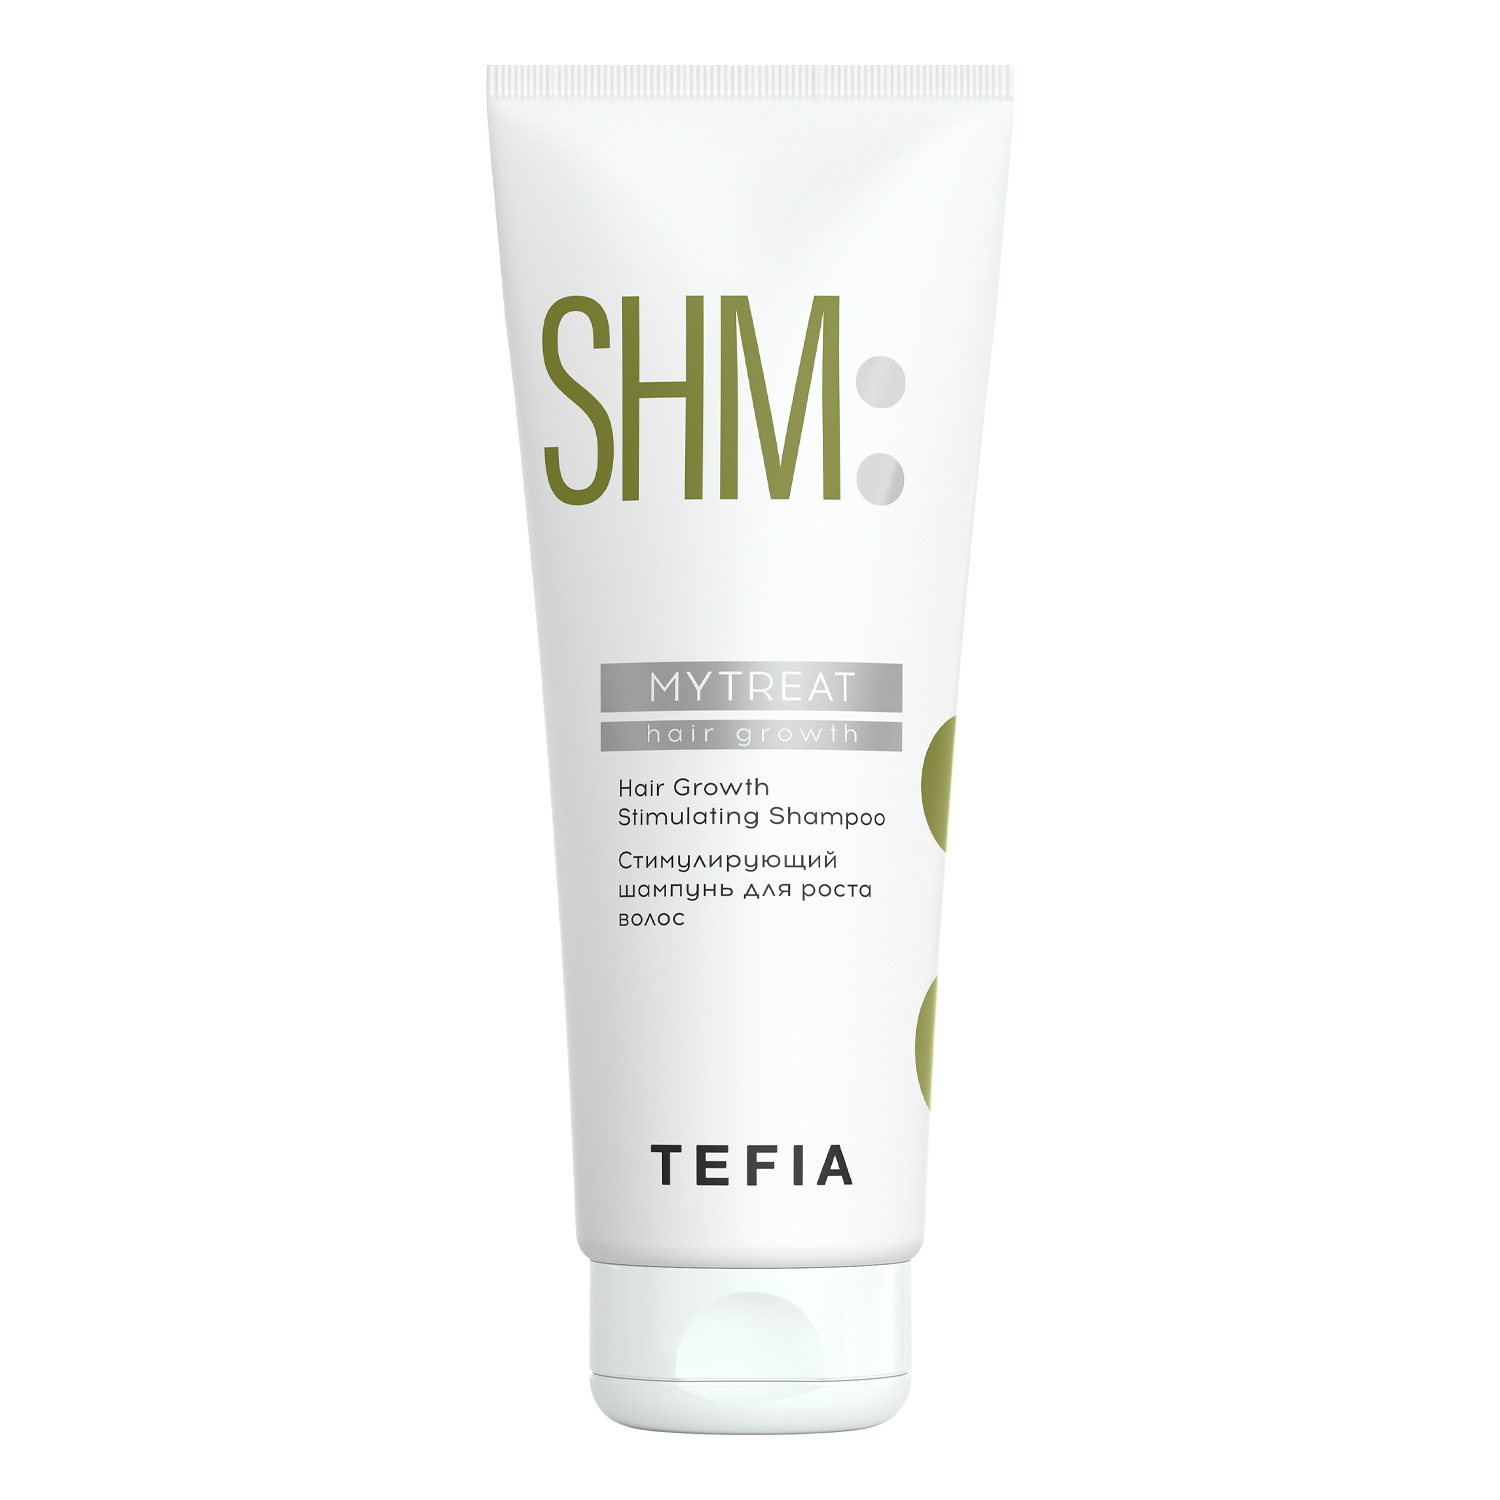 Tefia Стимулирующий шампунь для роста волос, 250 мл (Tefia, MyTreat)